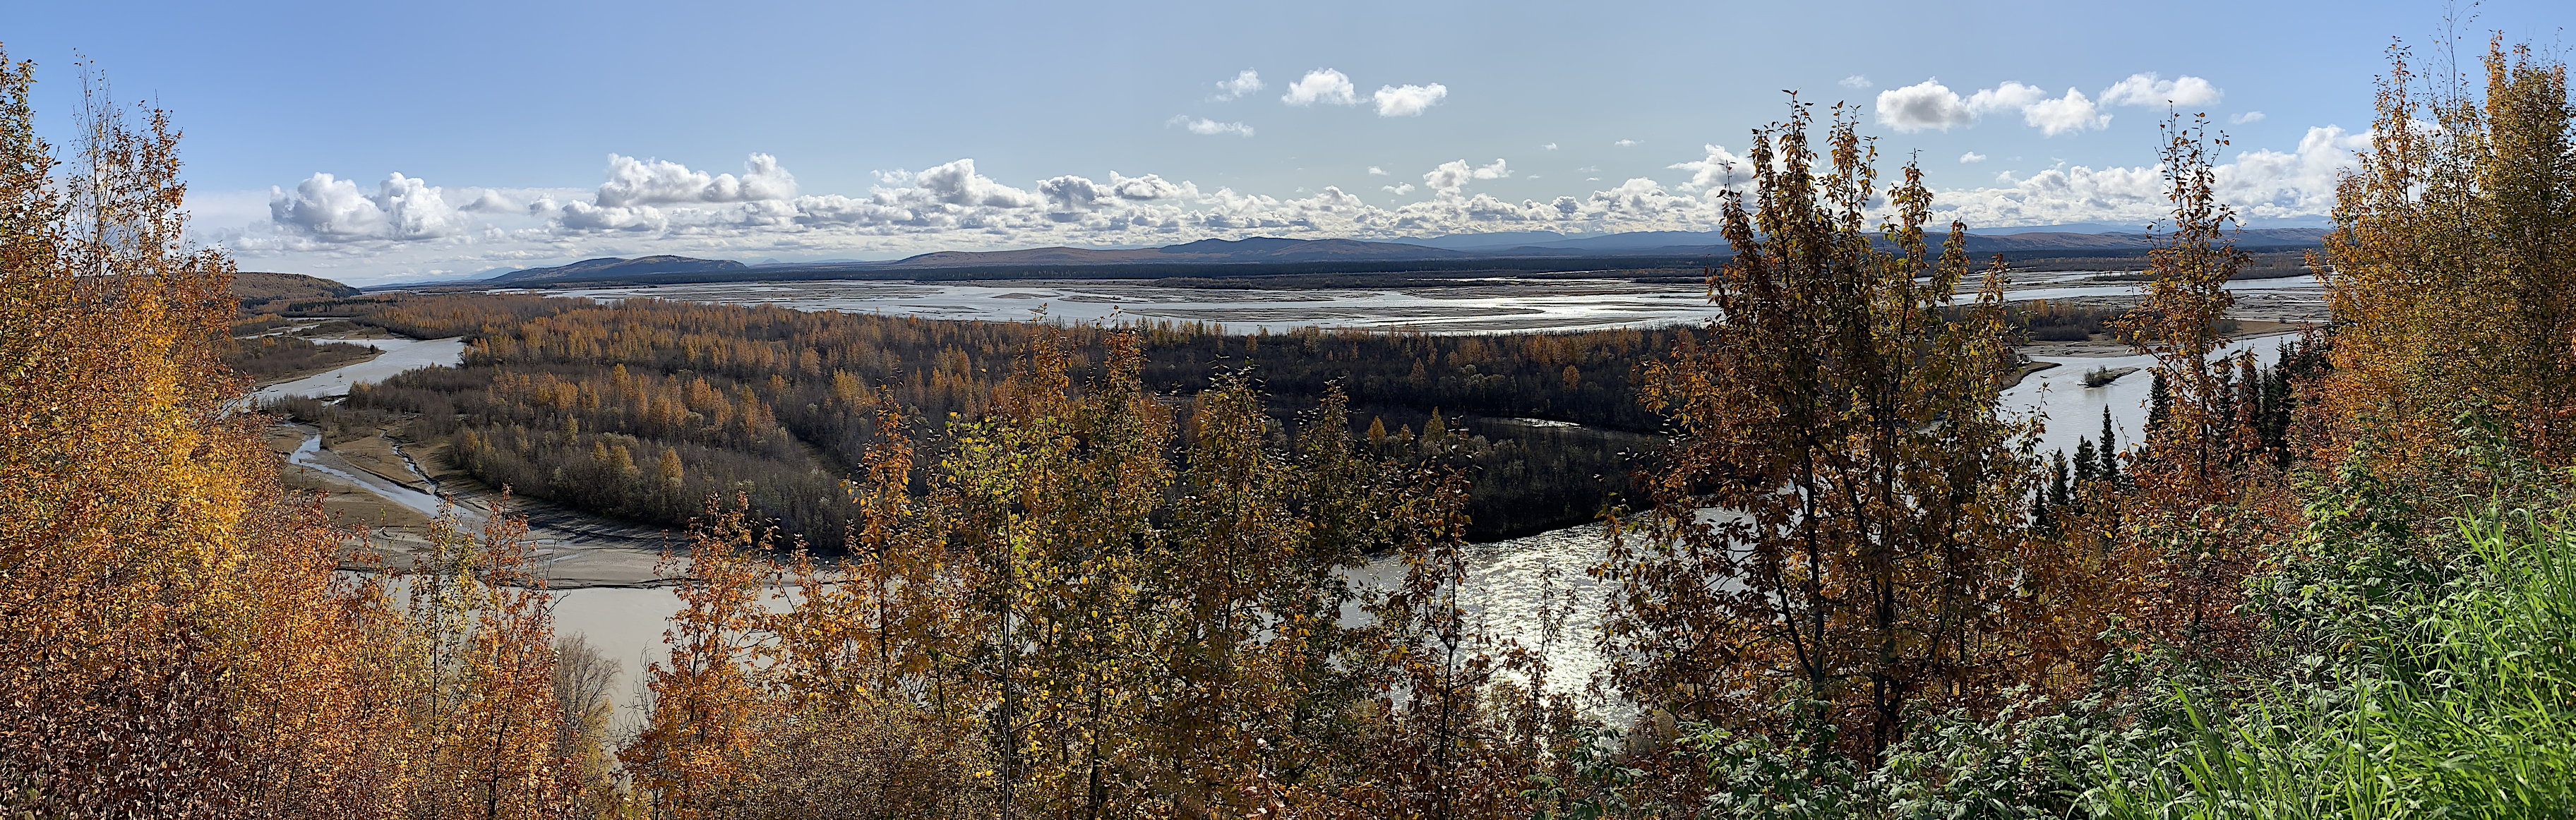 Panoramafoto über dem Tal des Tanana River